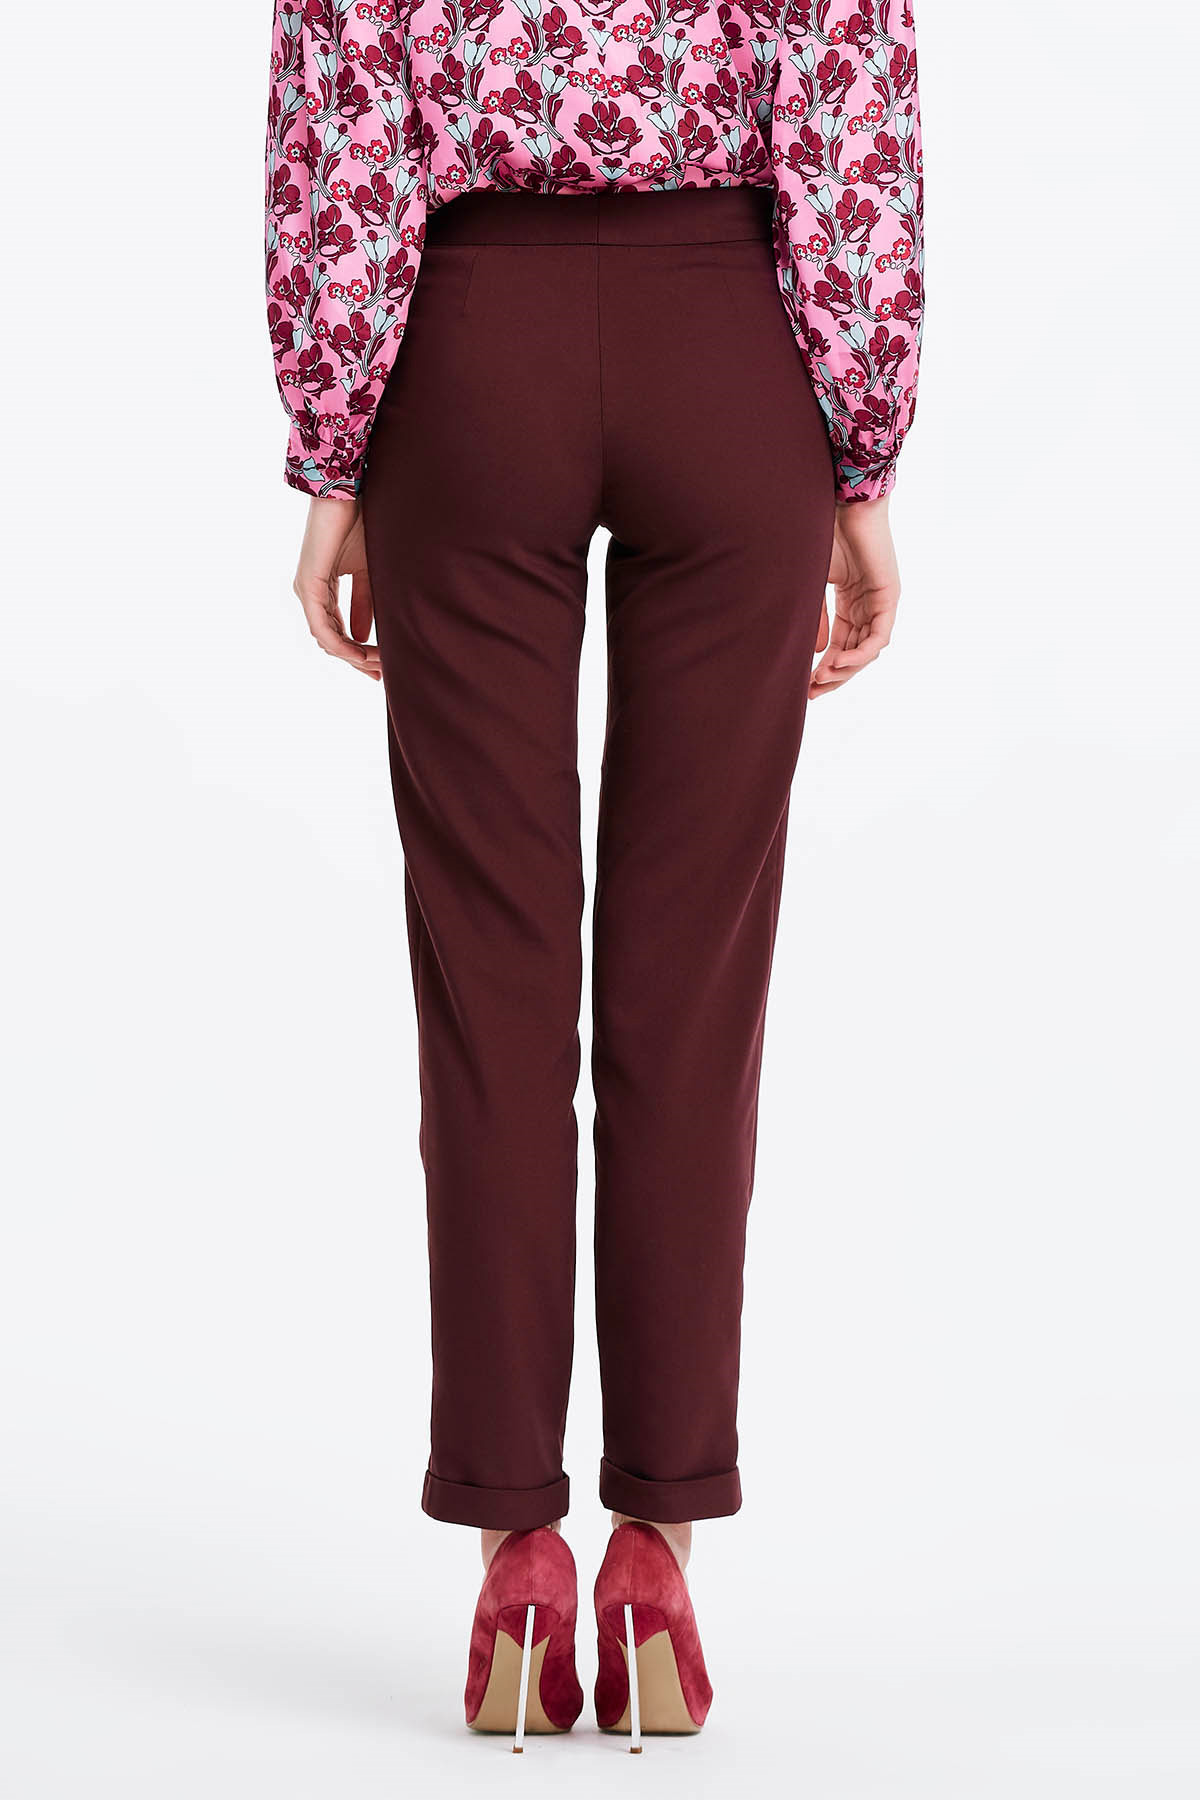 Short burgundy trousers , photo 2